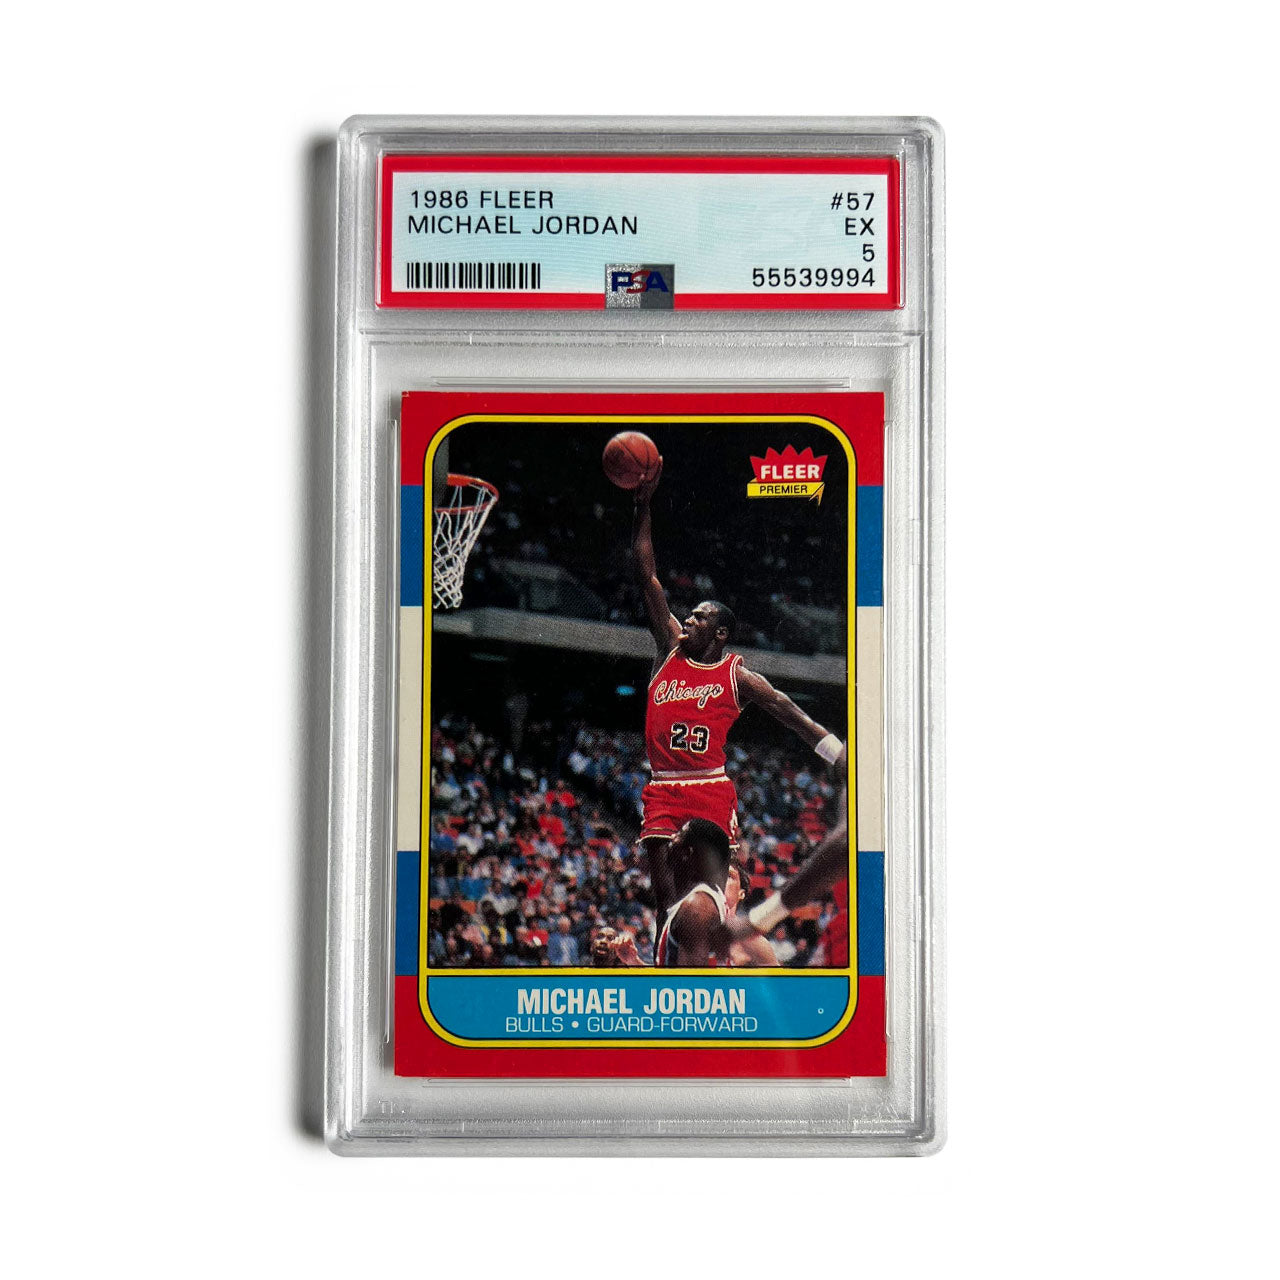 1986 Fleer Michael Jordan Rookie Card | Uncrate